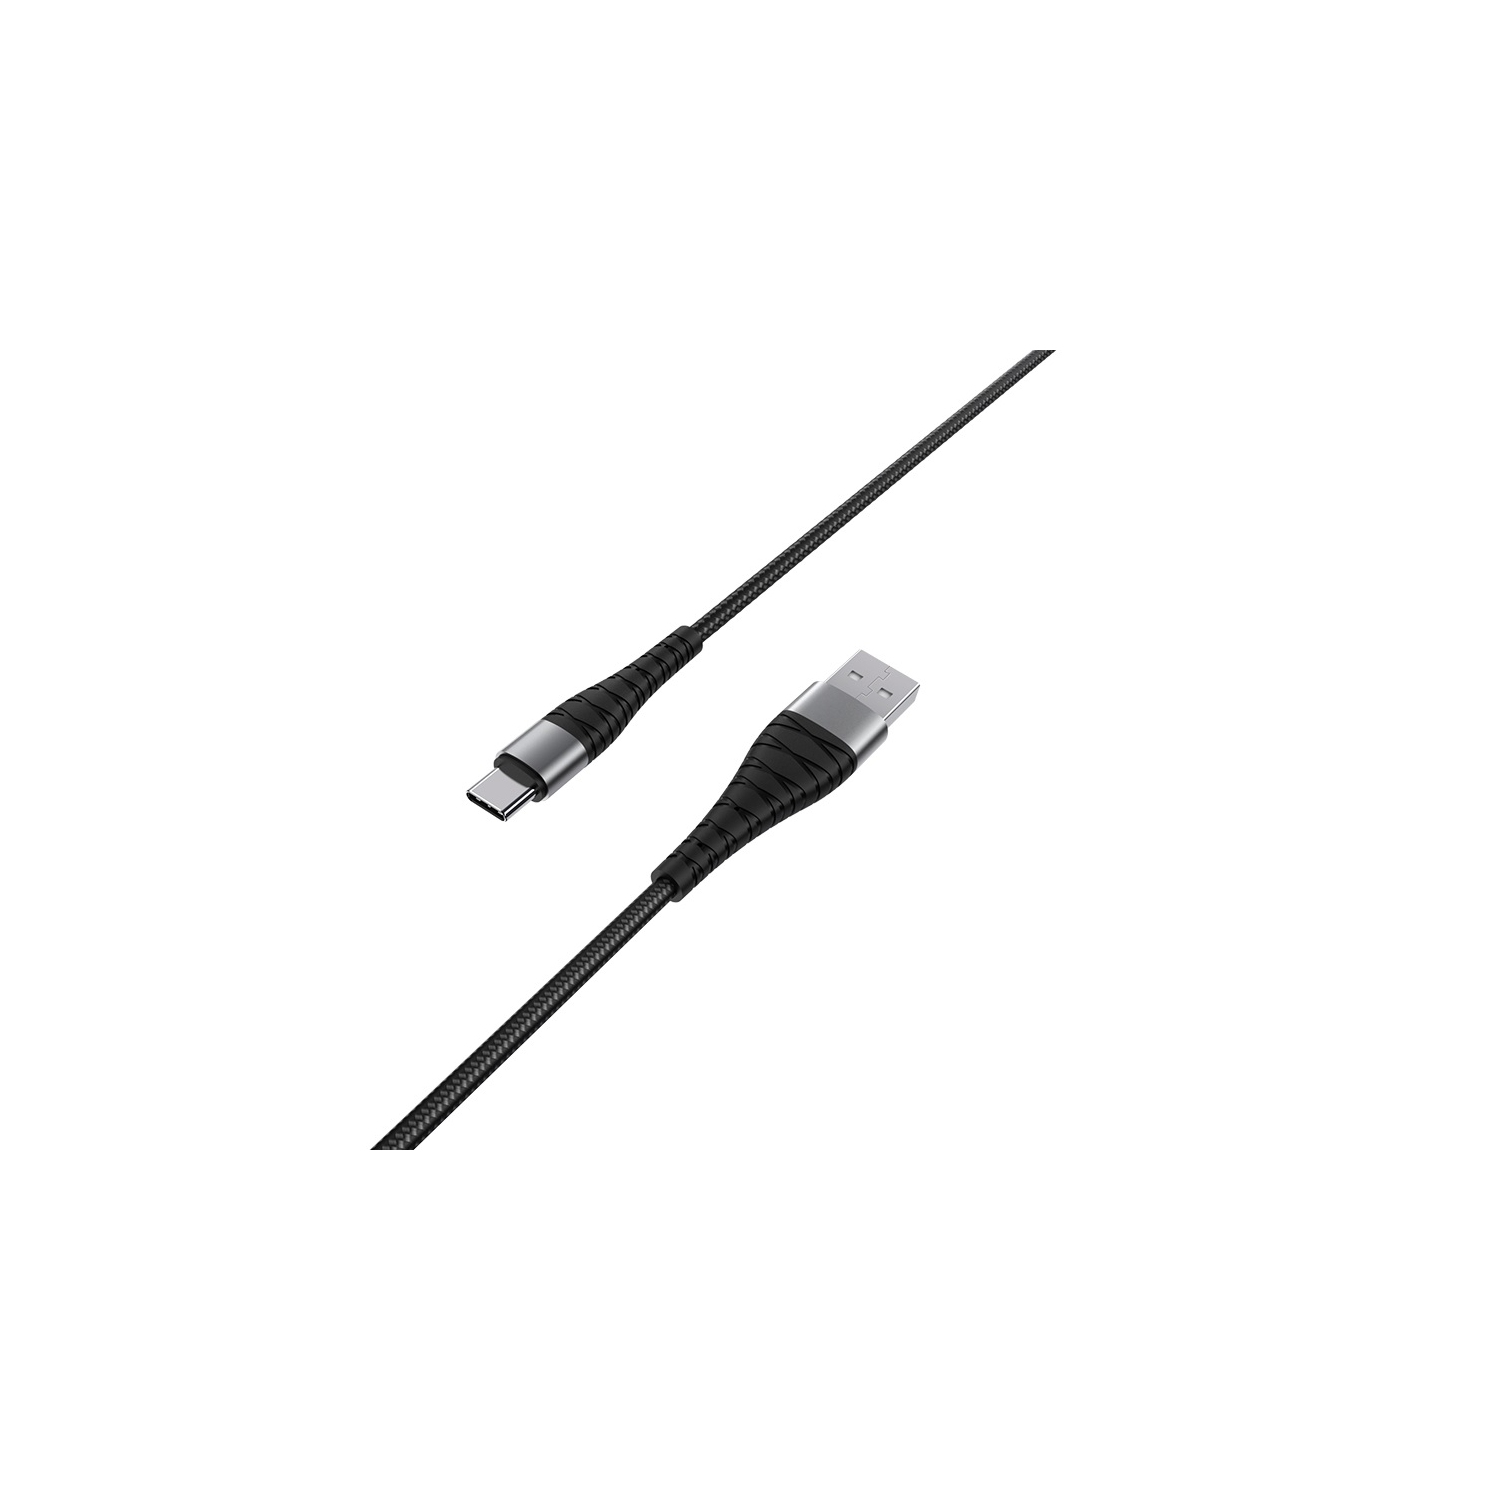 【3 Pks】 1M/3.3Ft Heavy Duty Nylon Braid USB Type C Fast Charging Data Cable Cord for Samsung Google LG Motorola Phones, Black